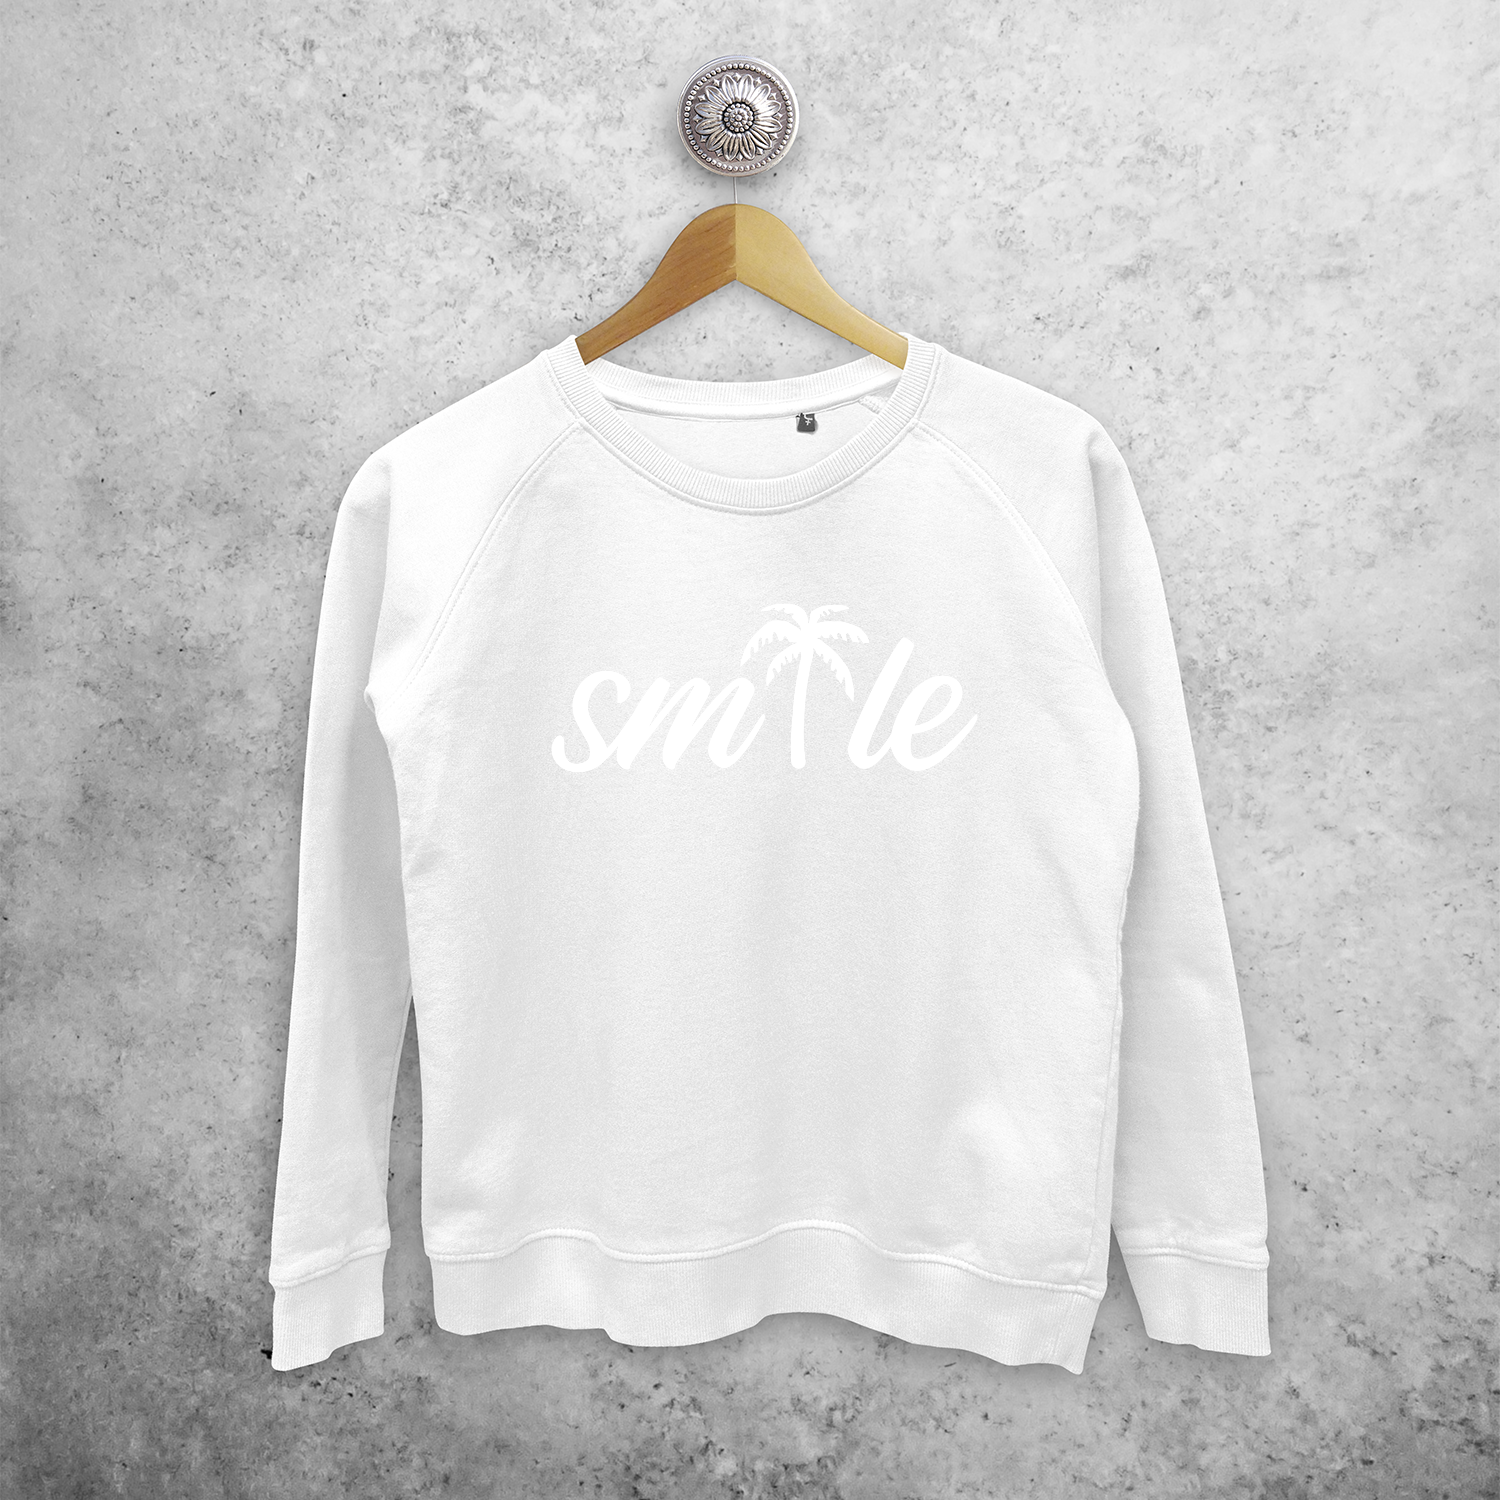 'Smile' magic sweater